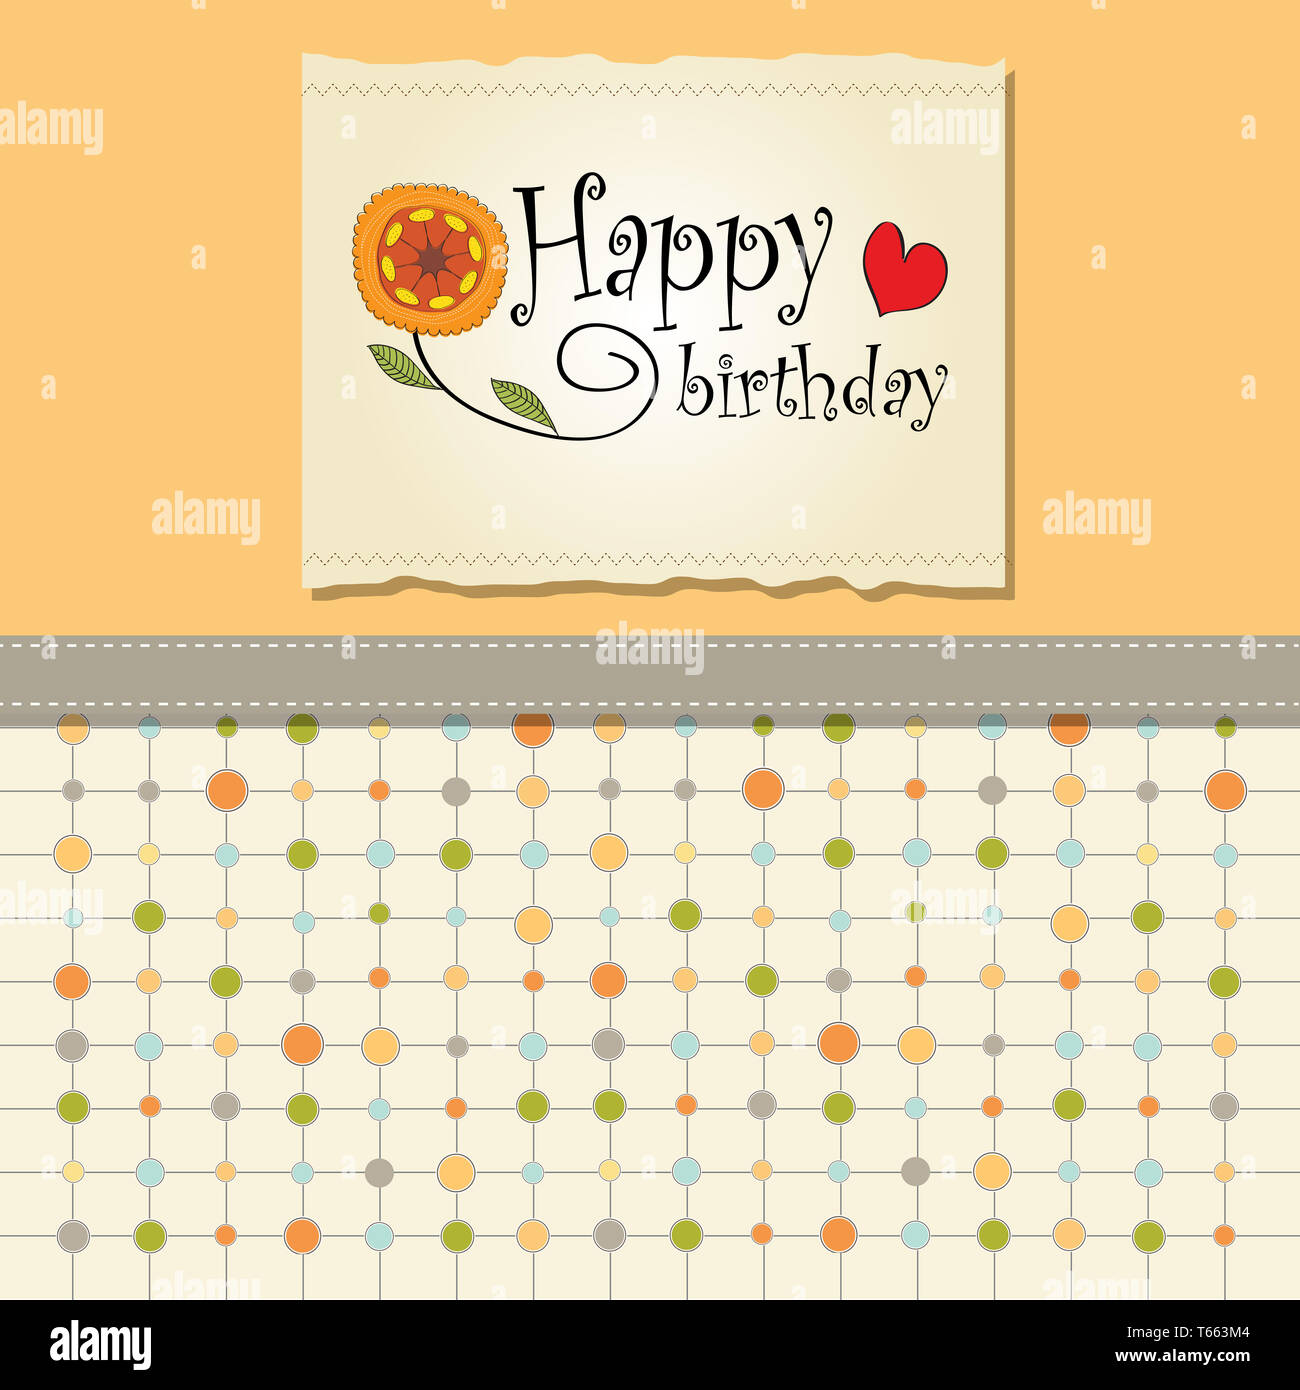 birthday greeting card template Stock Photo